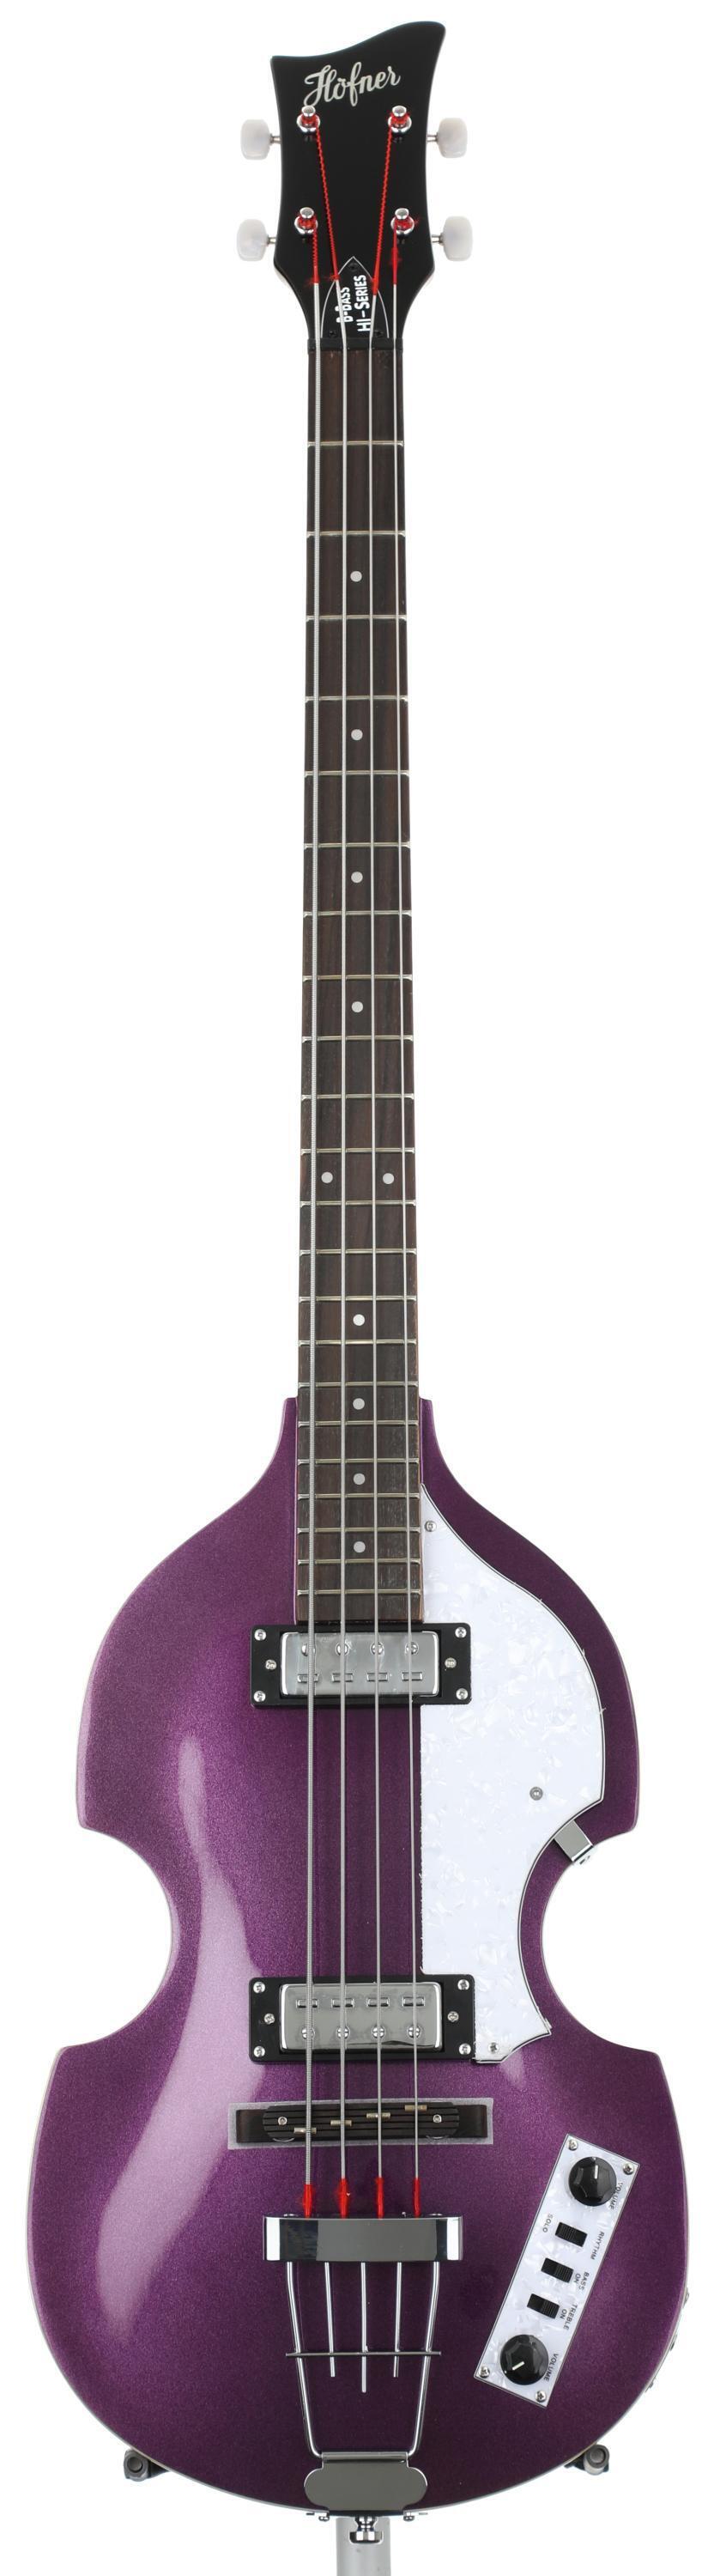 Hofner Ignition Violin Bass Dent and Scratch - Metallic Purple 